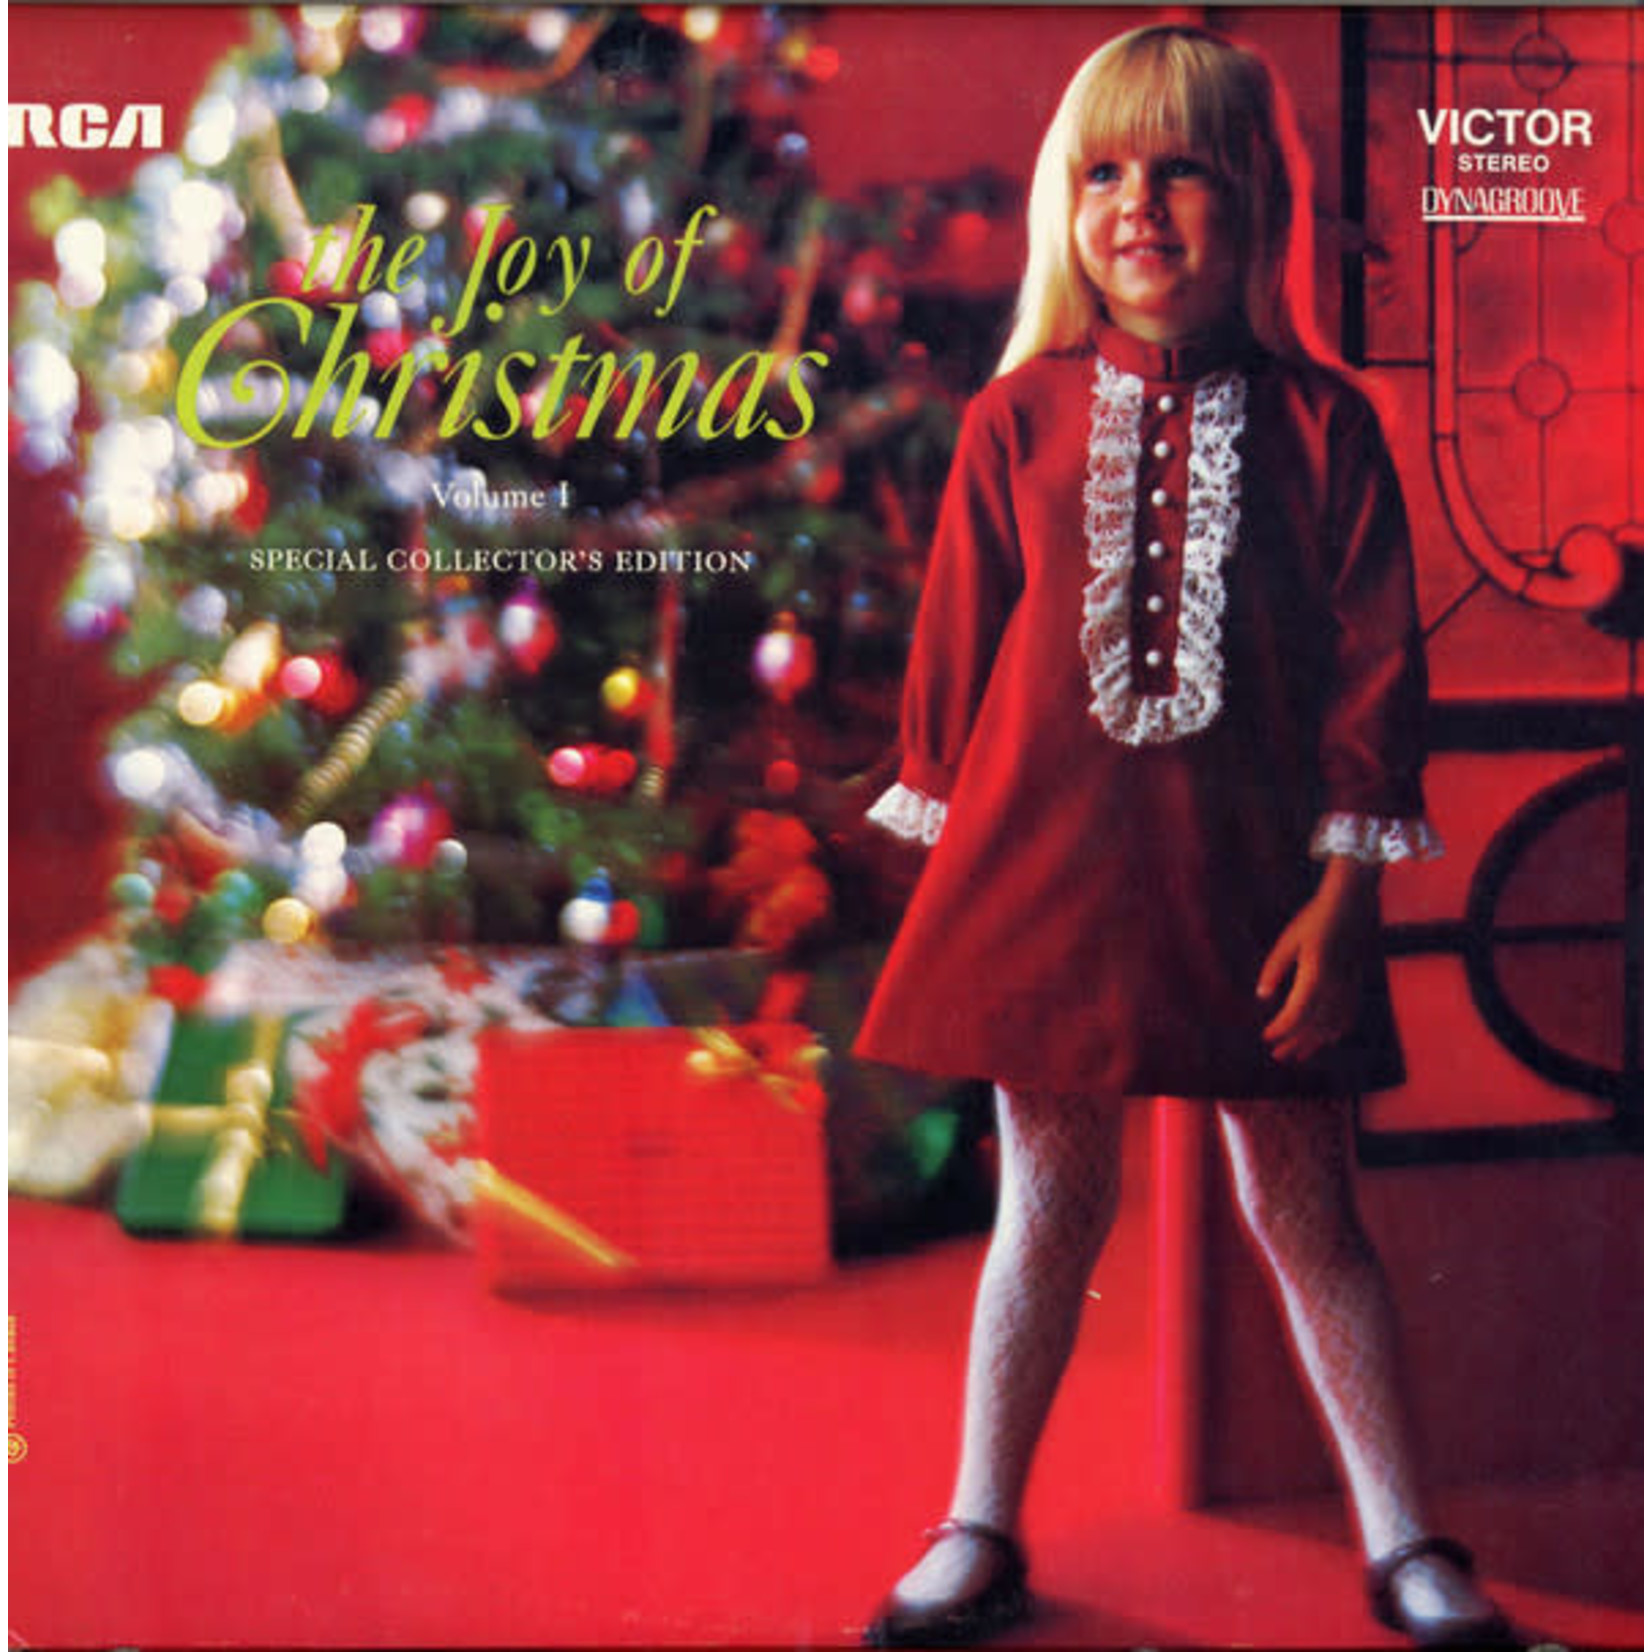 The Joy of Christmas Volume 1 (1966, LP, RCA PRS-230A, VG)